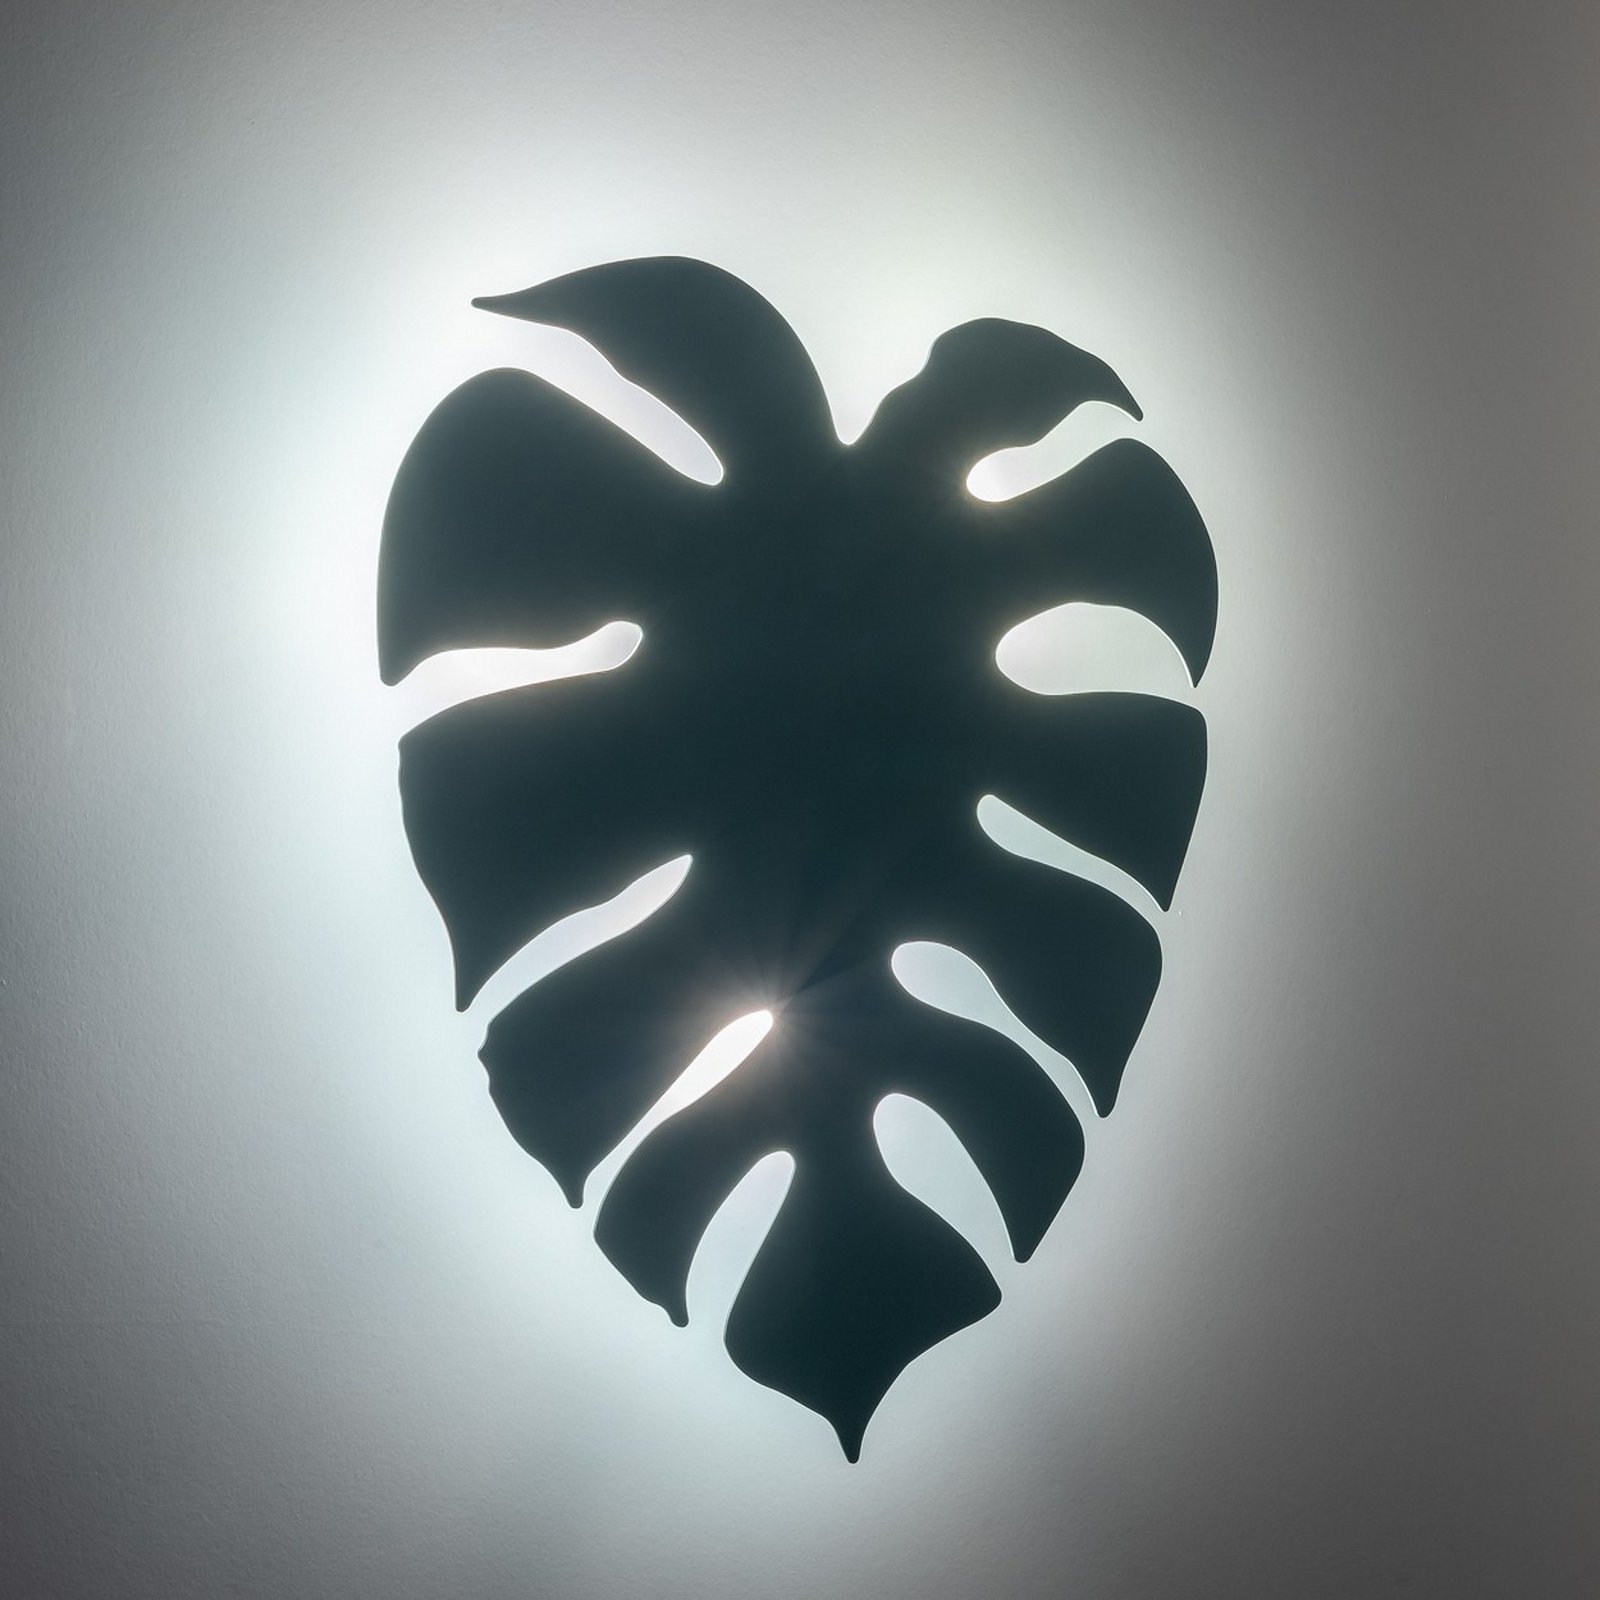 Monstera wall light, leaf shape, 3 x G9, steel, mint green